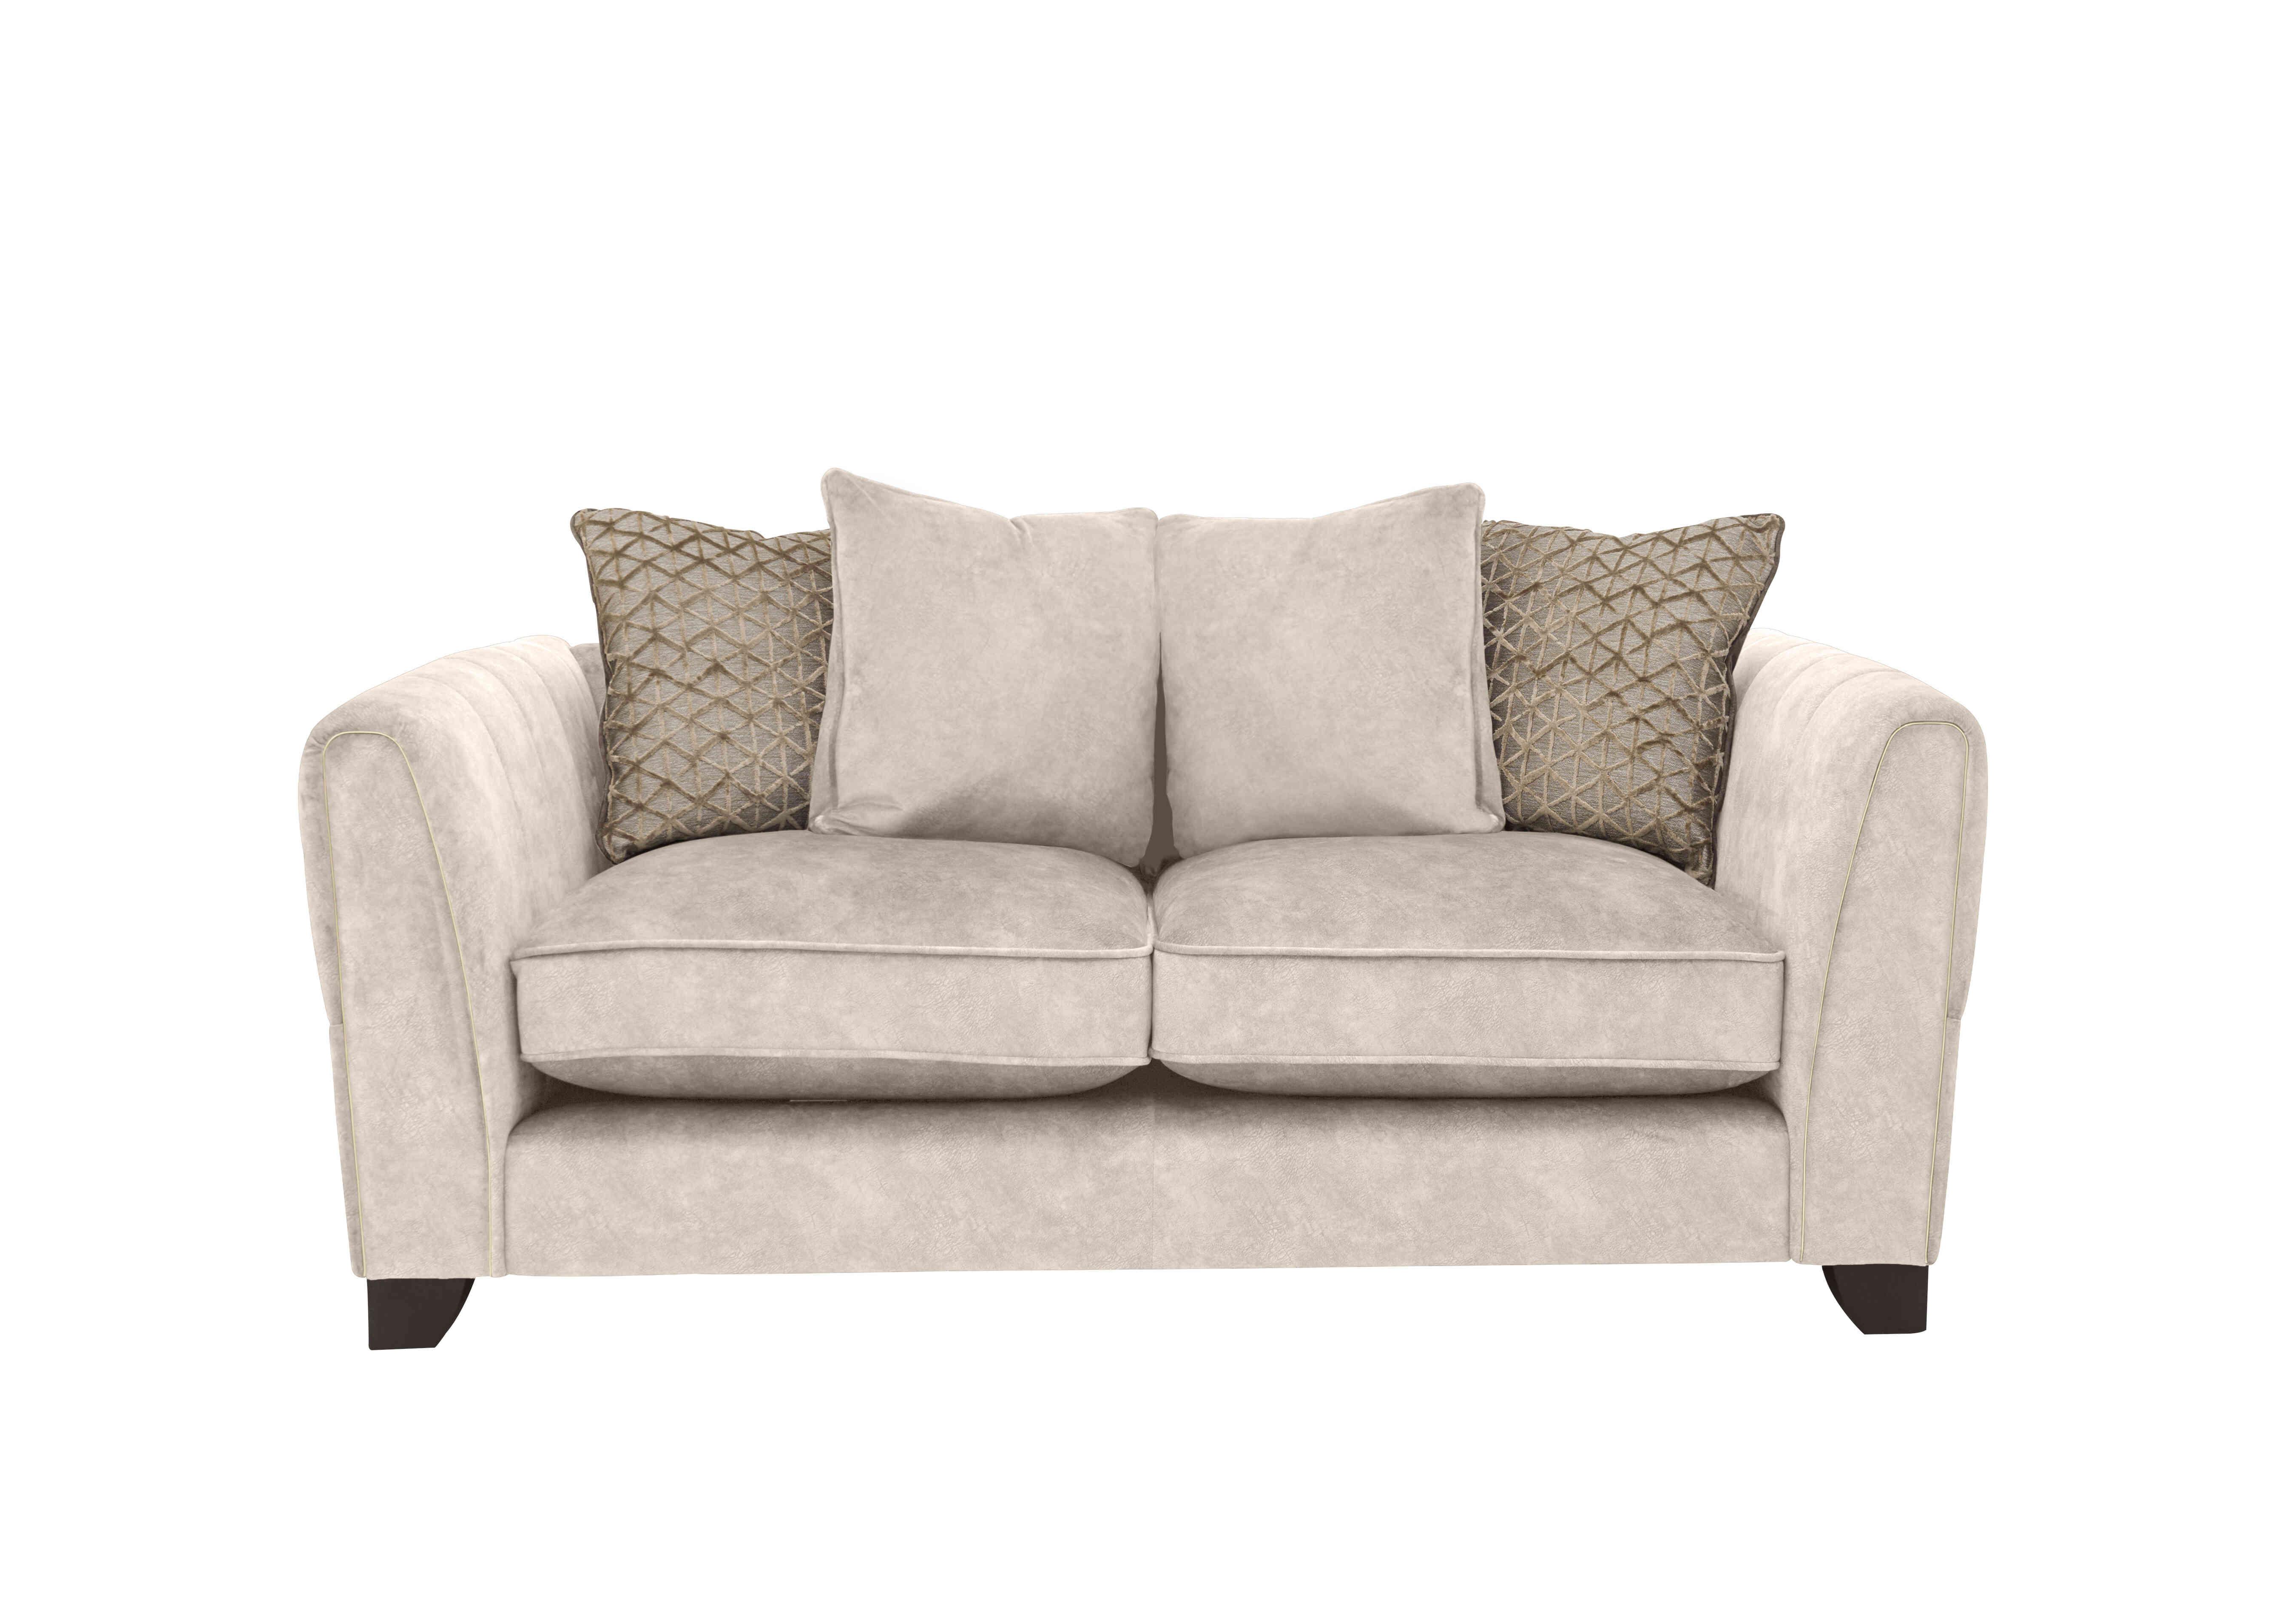 Ariana 2 Seater Fabric Pillow Back Sofa in Dapple Cream Brass Insert on Furniture Village